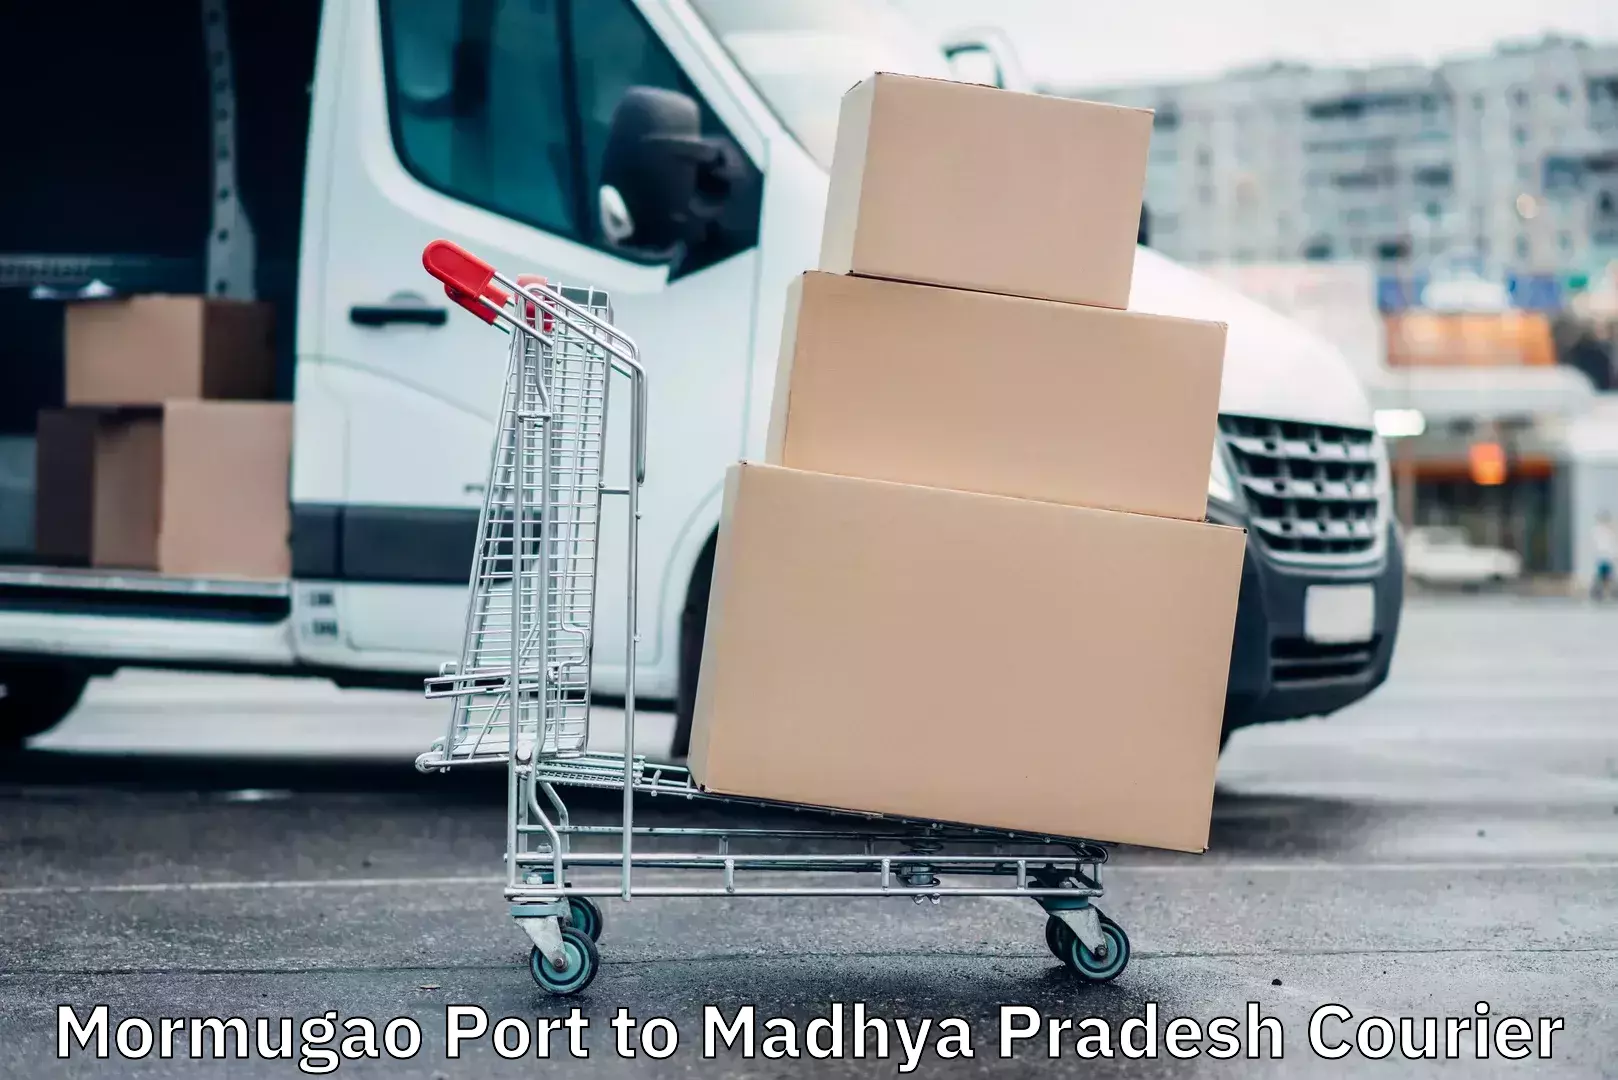 Express package delivery Mormugao Port to Madhya Pradesh